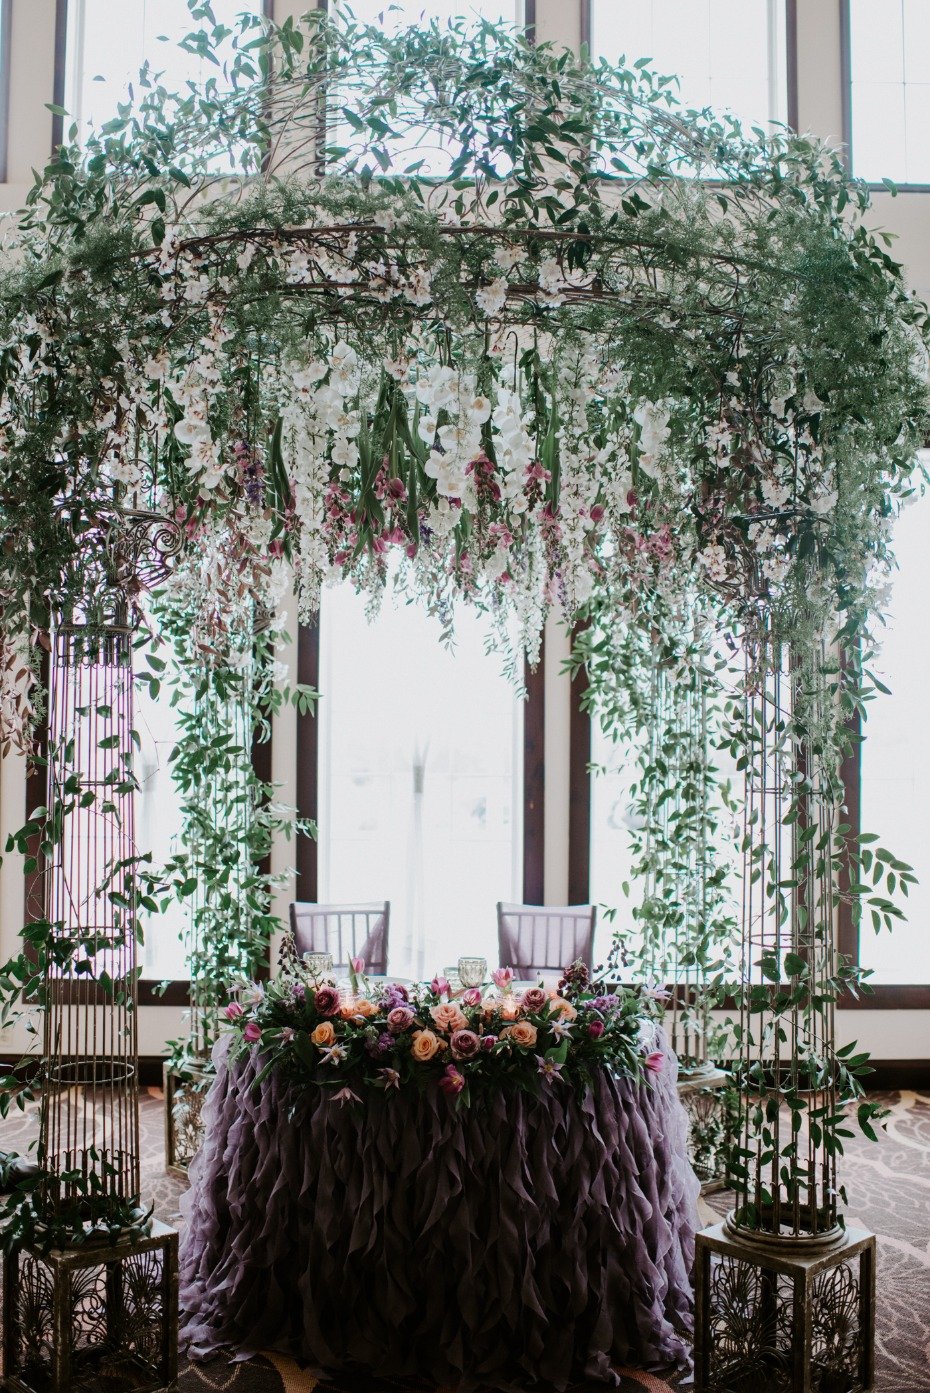 Flower filled sweetheart table